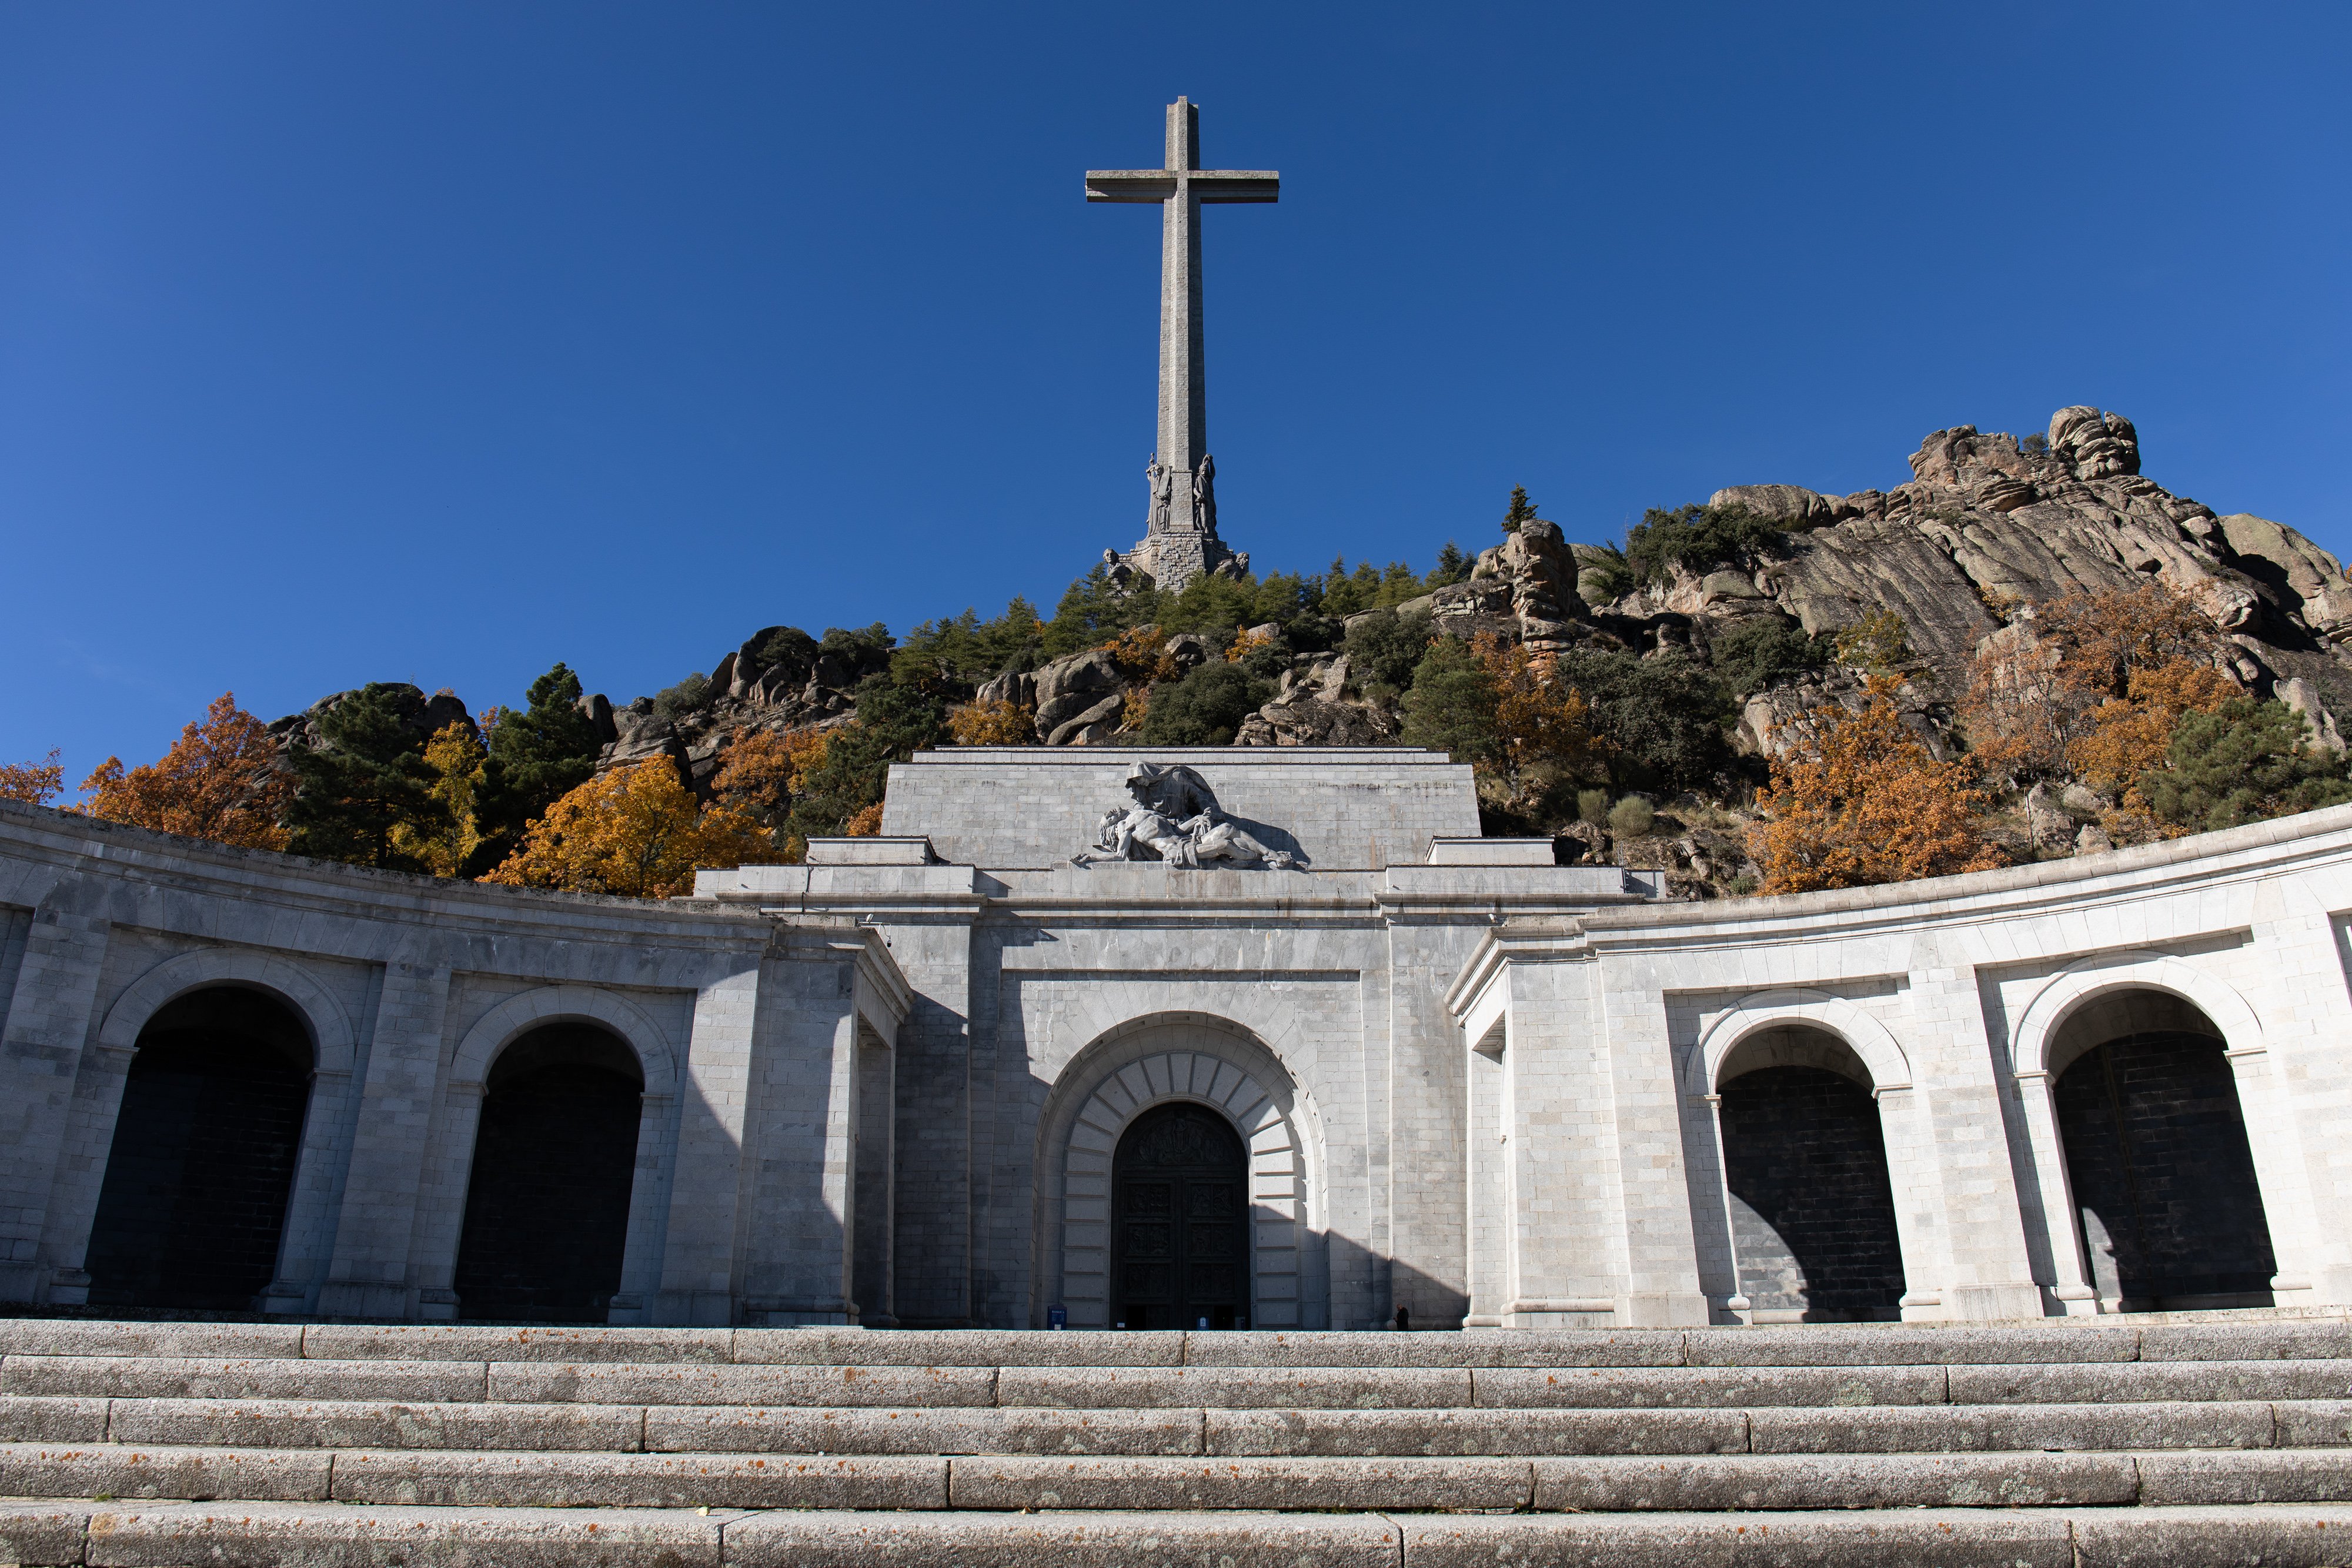 Exhumation of crypts in Spain's Valle de los Caídos, halted by a judge